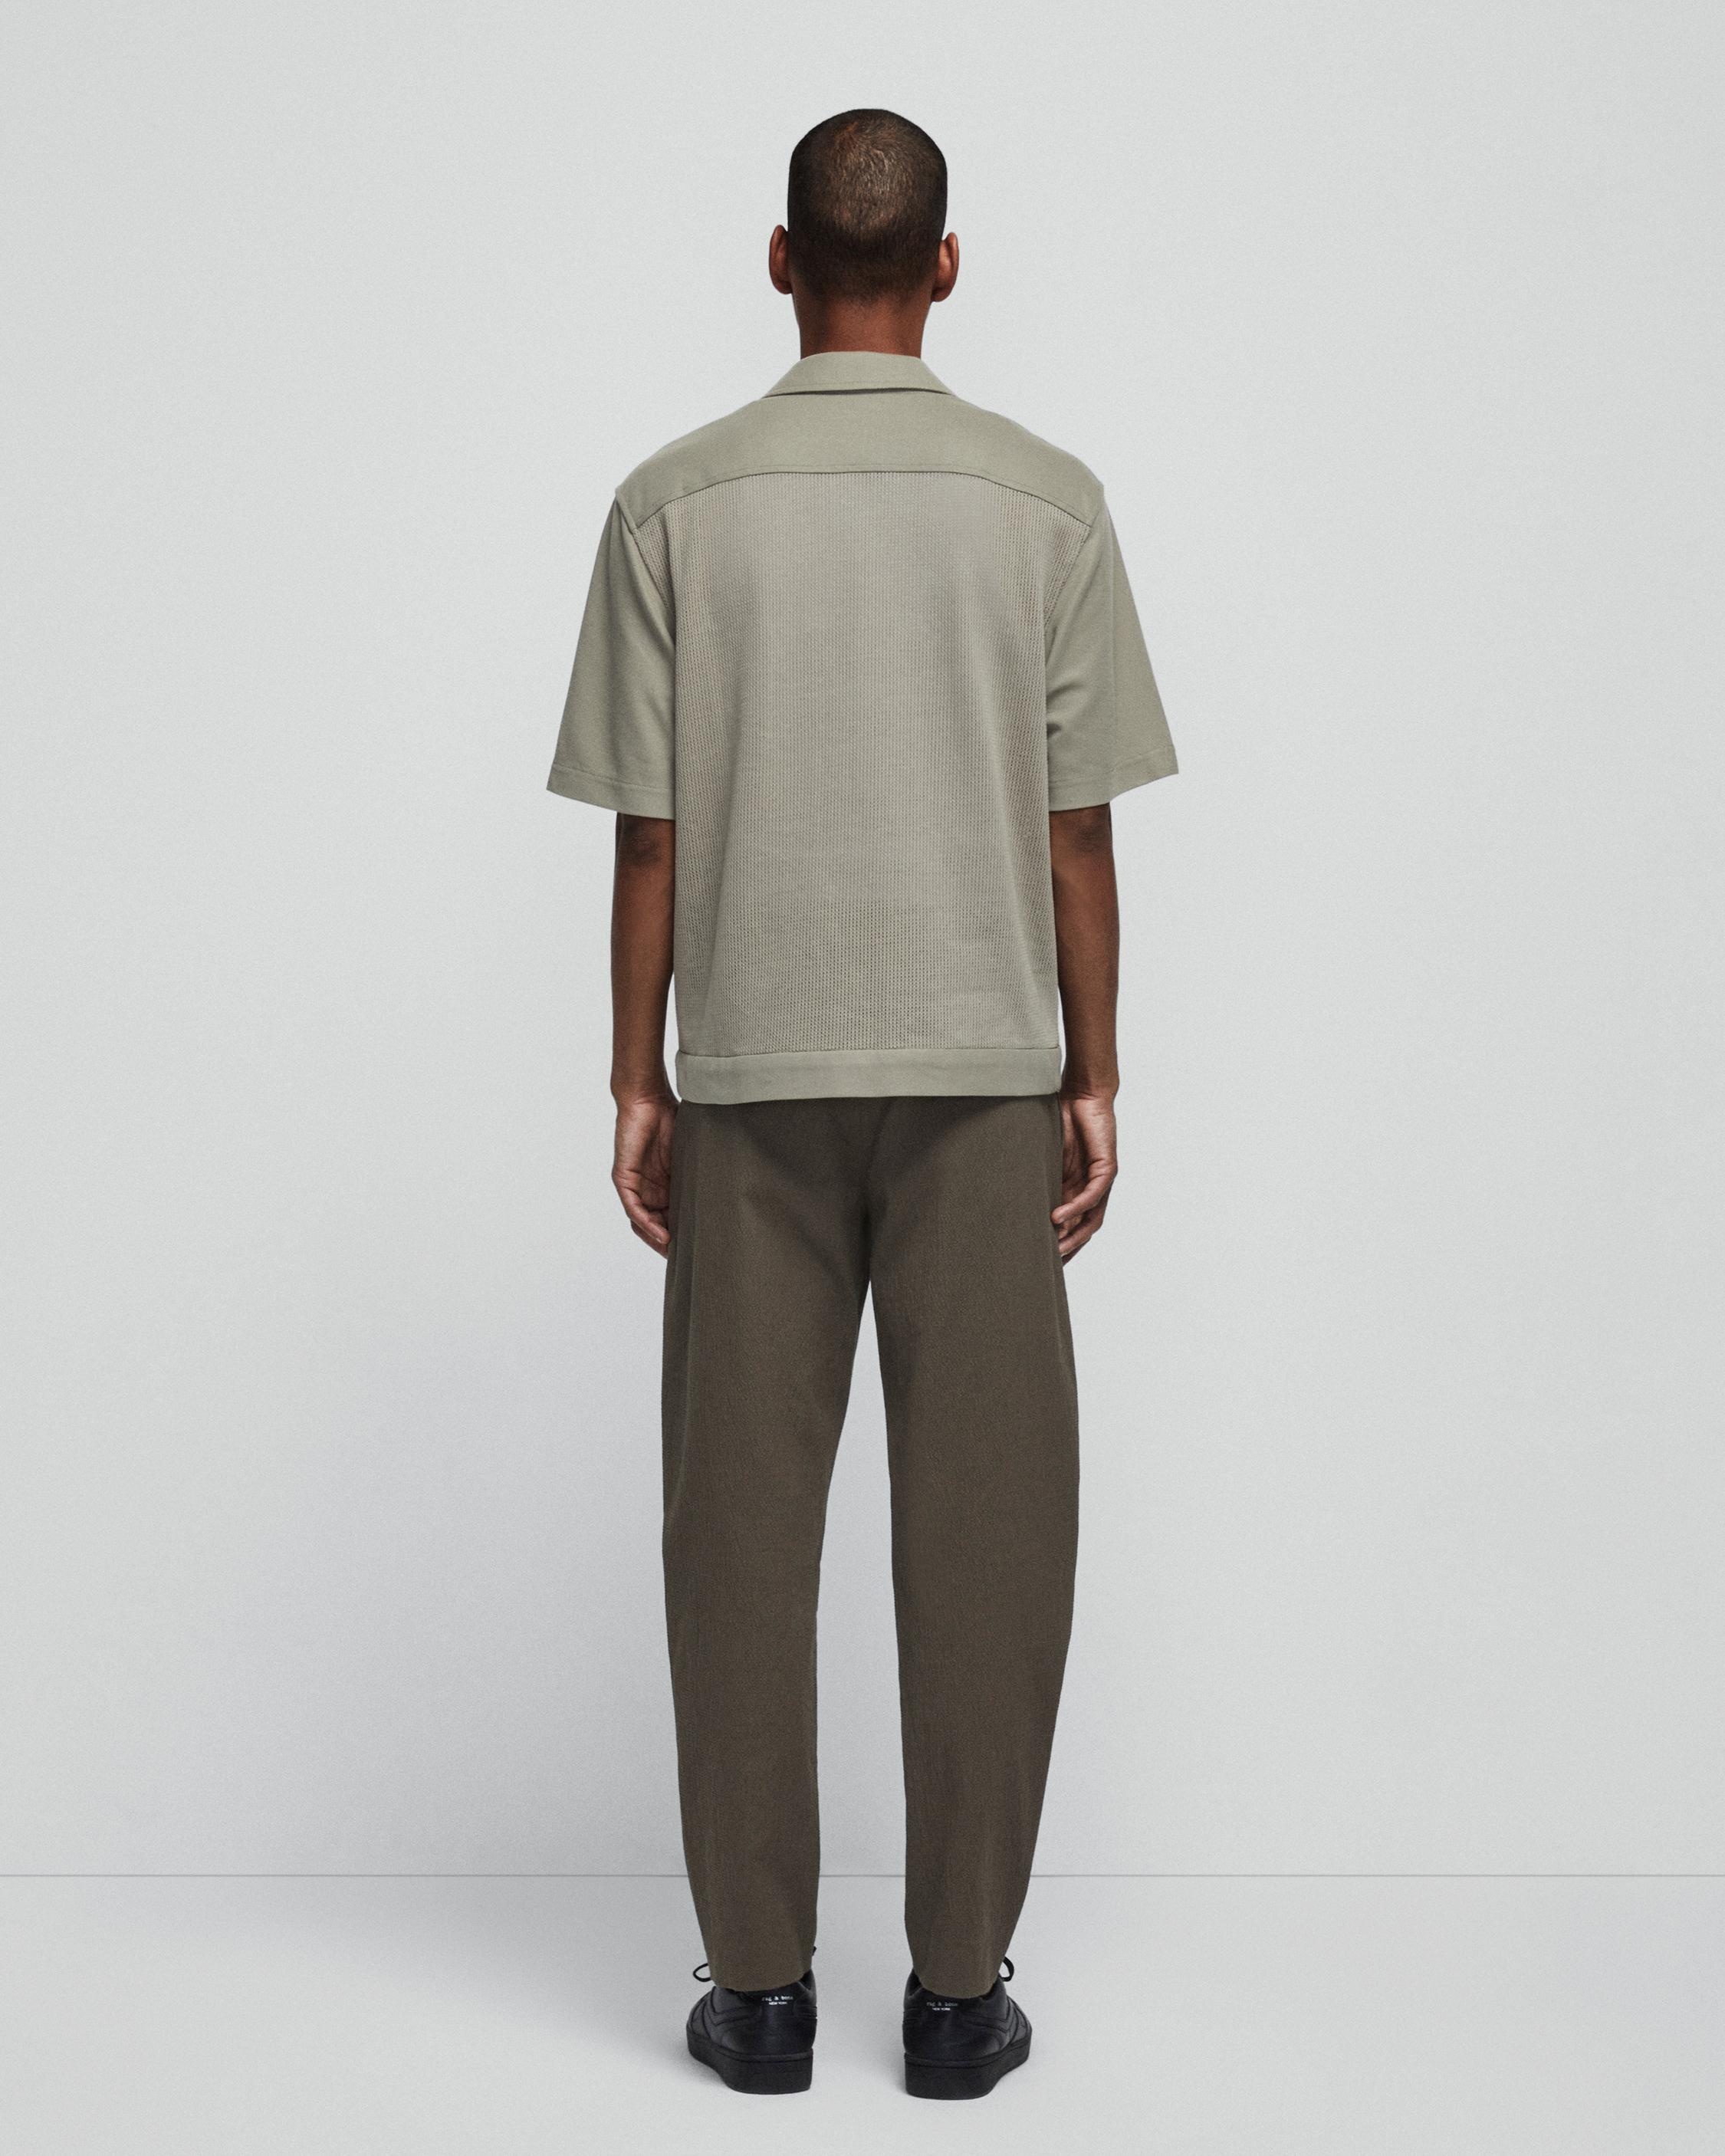 Avery Knit Mesh Shirt
Classic Fit Shirt - 6